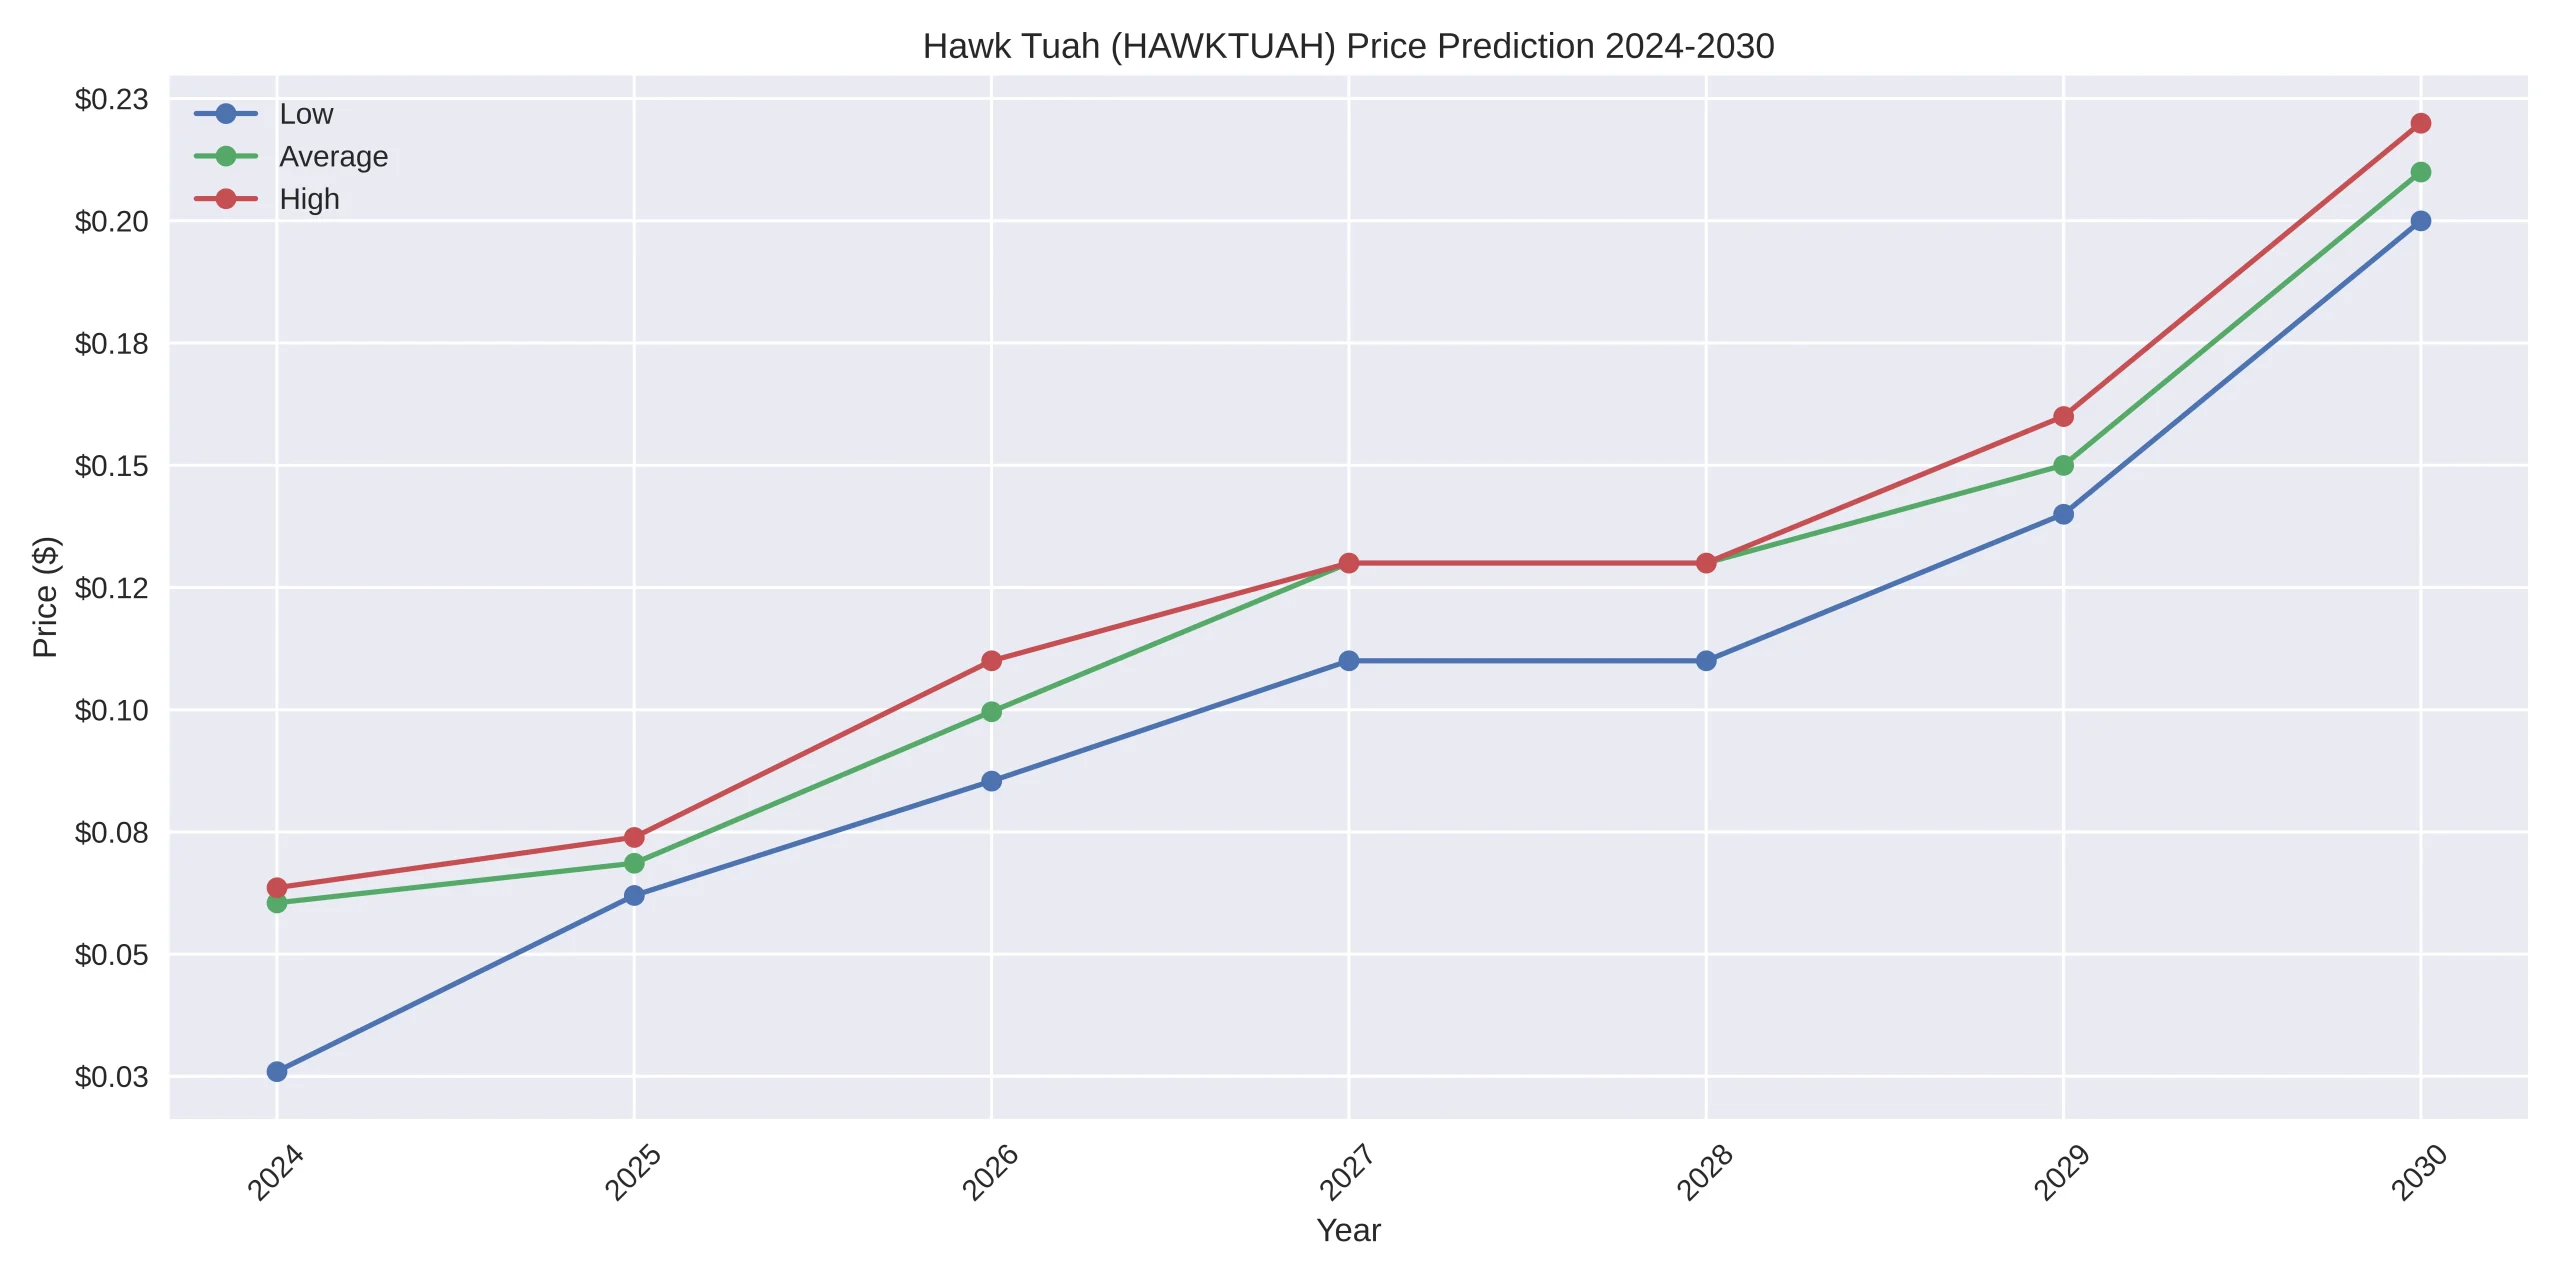 Hawk Tuah (HAWKTUAH) Price Prediction